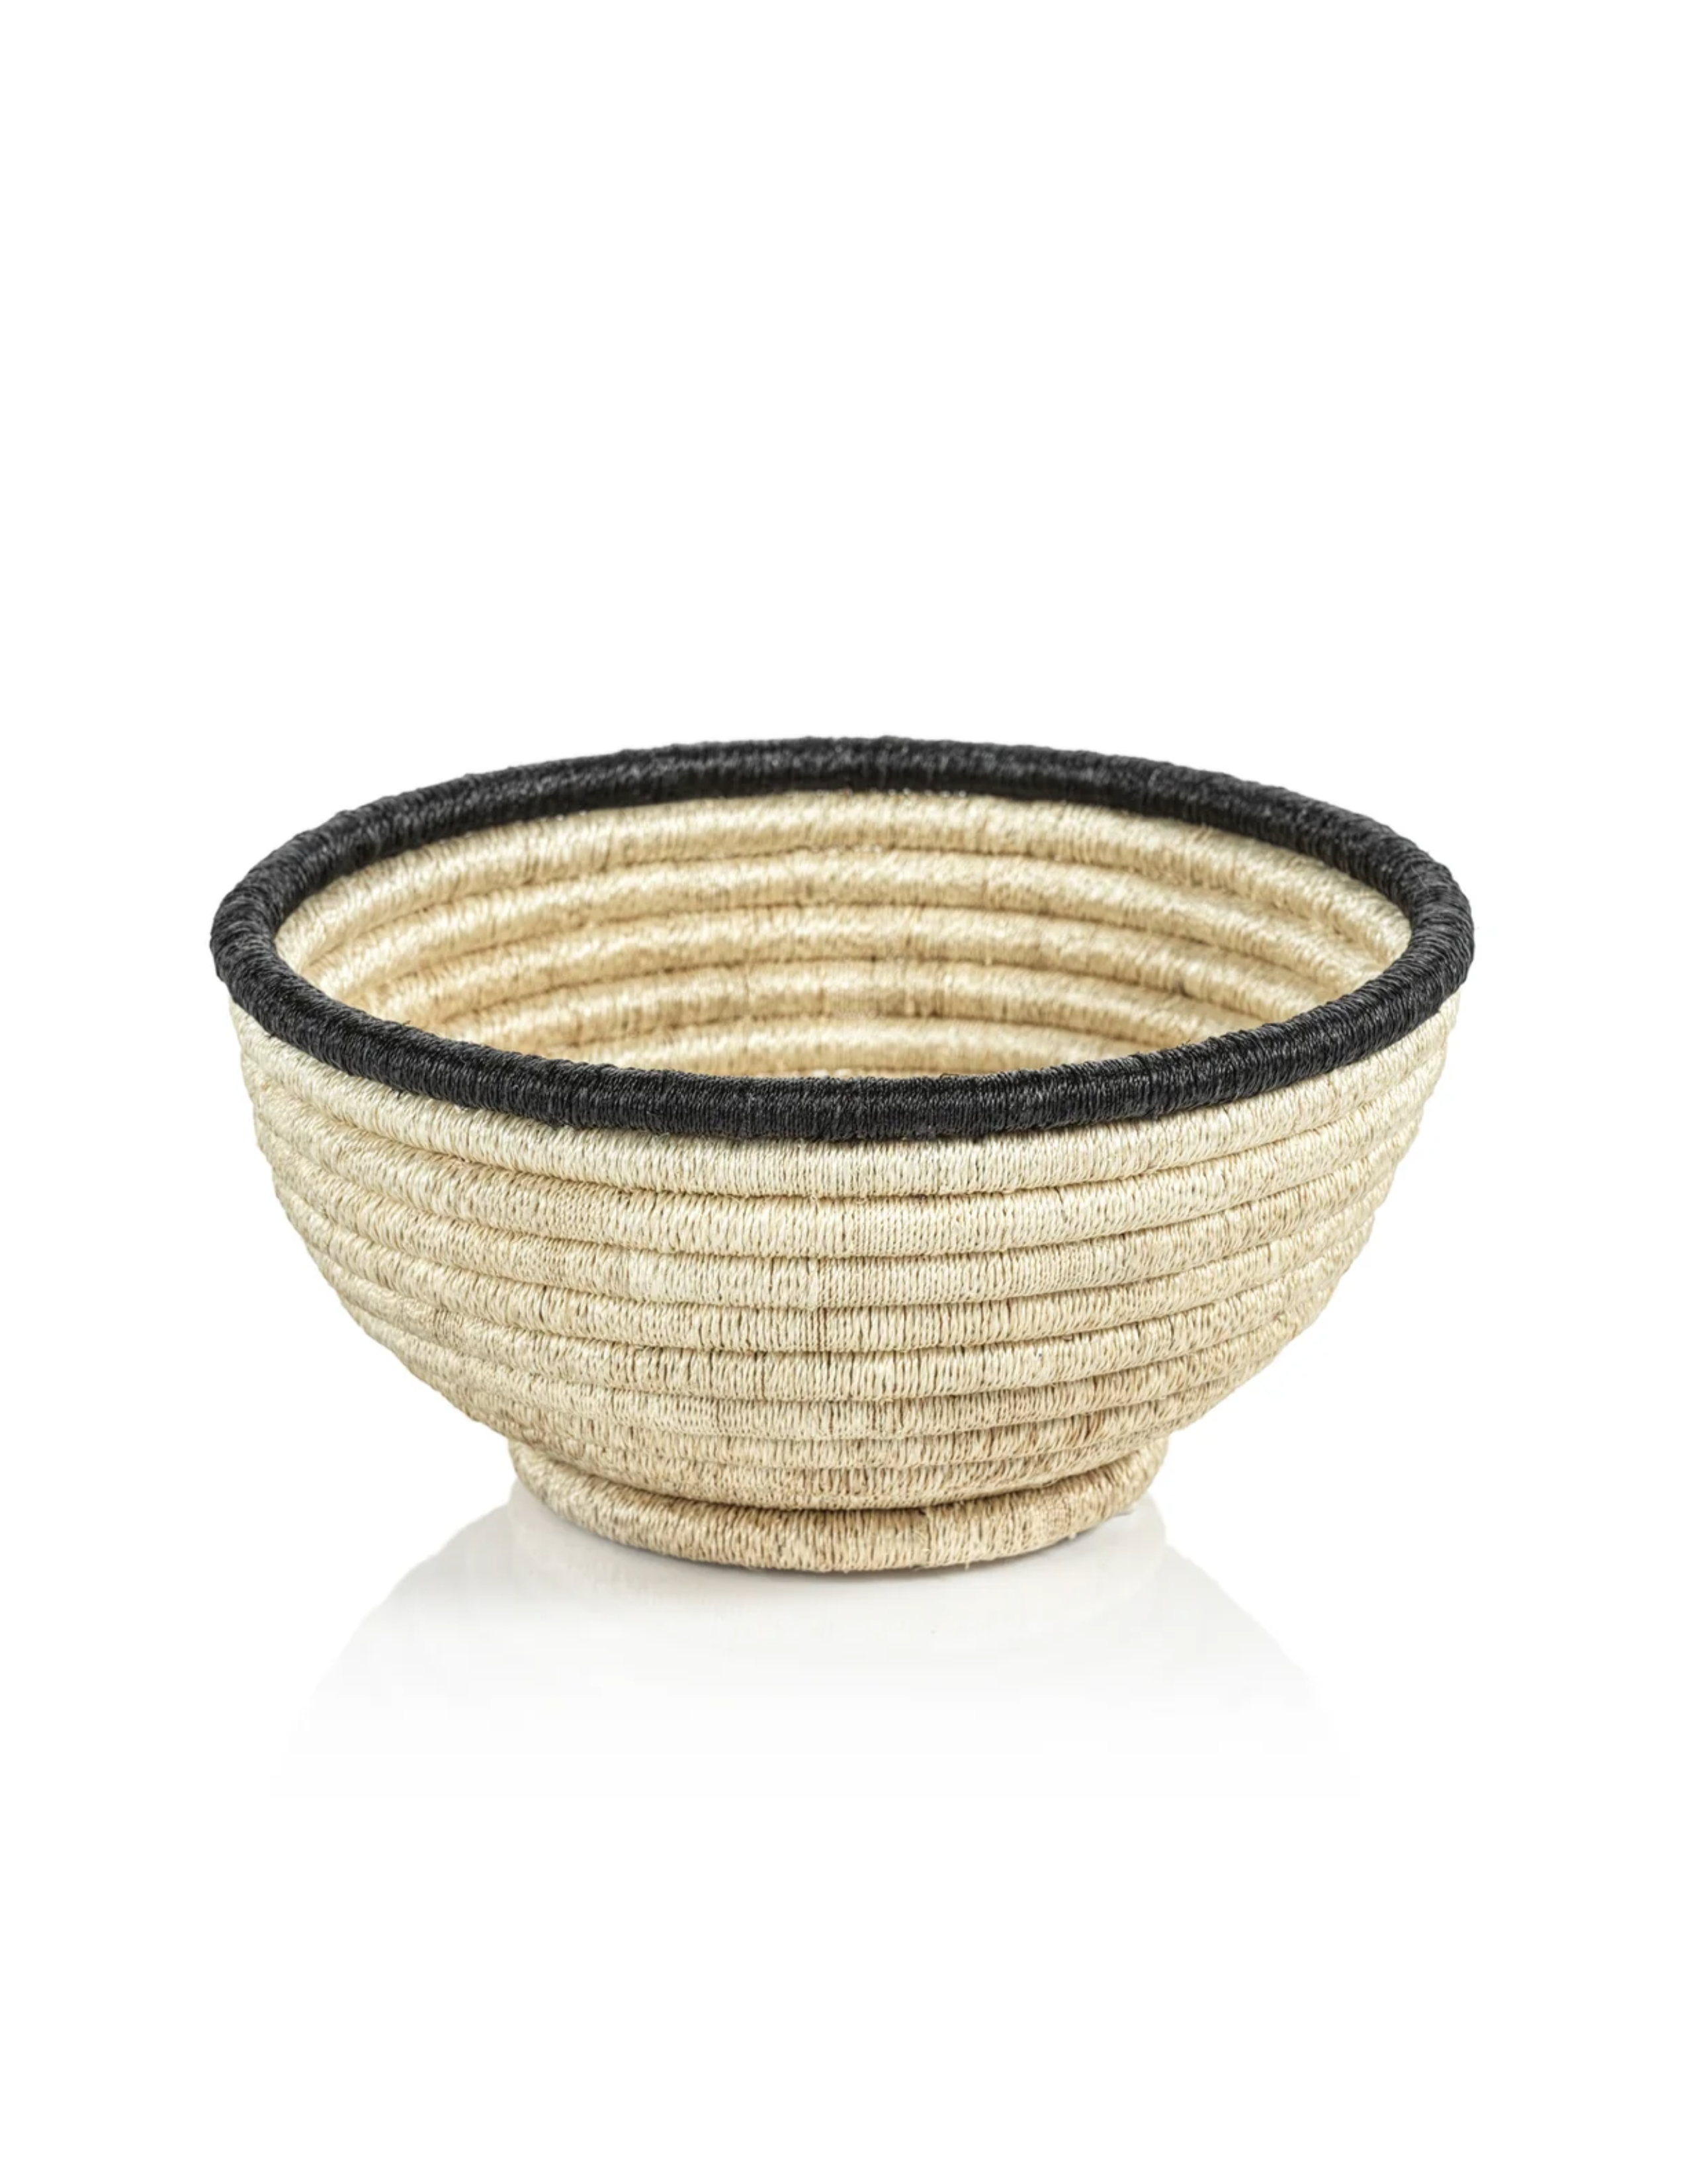 Martigues Coiled Abaca Bowl - Small